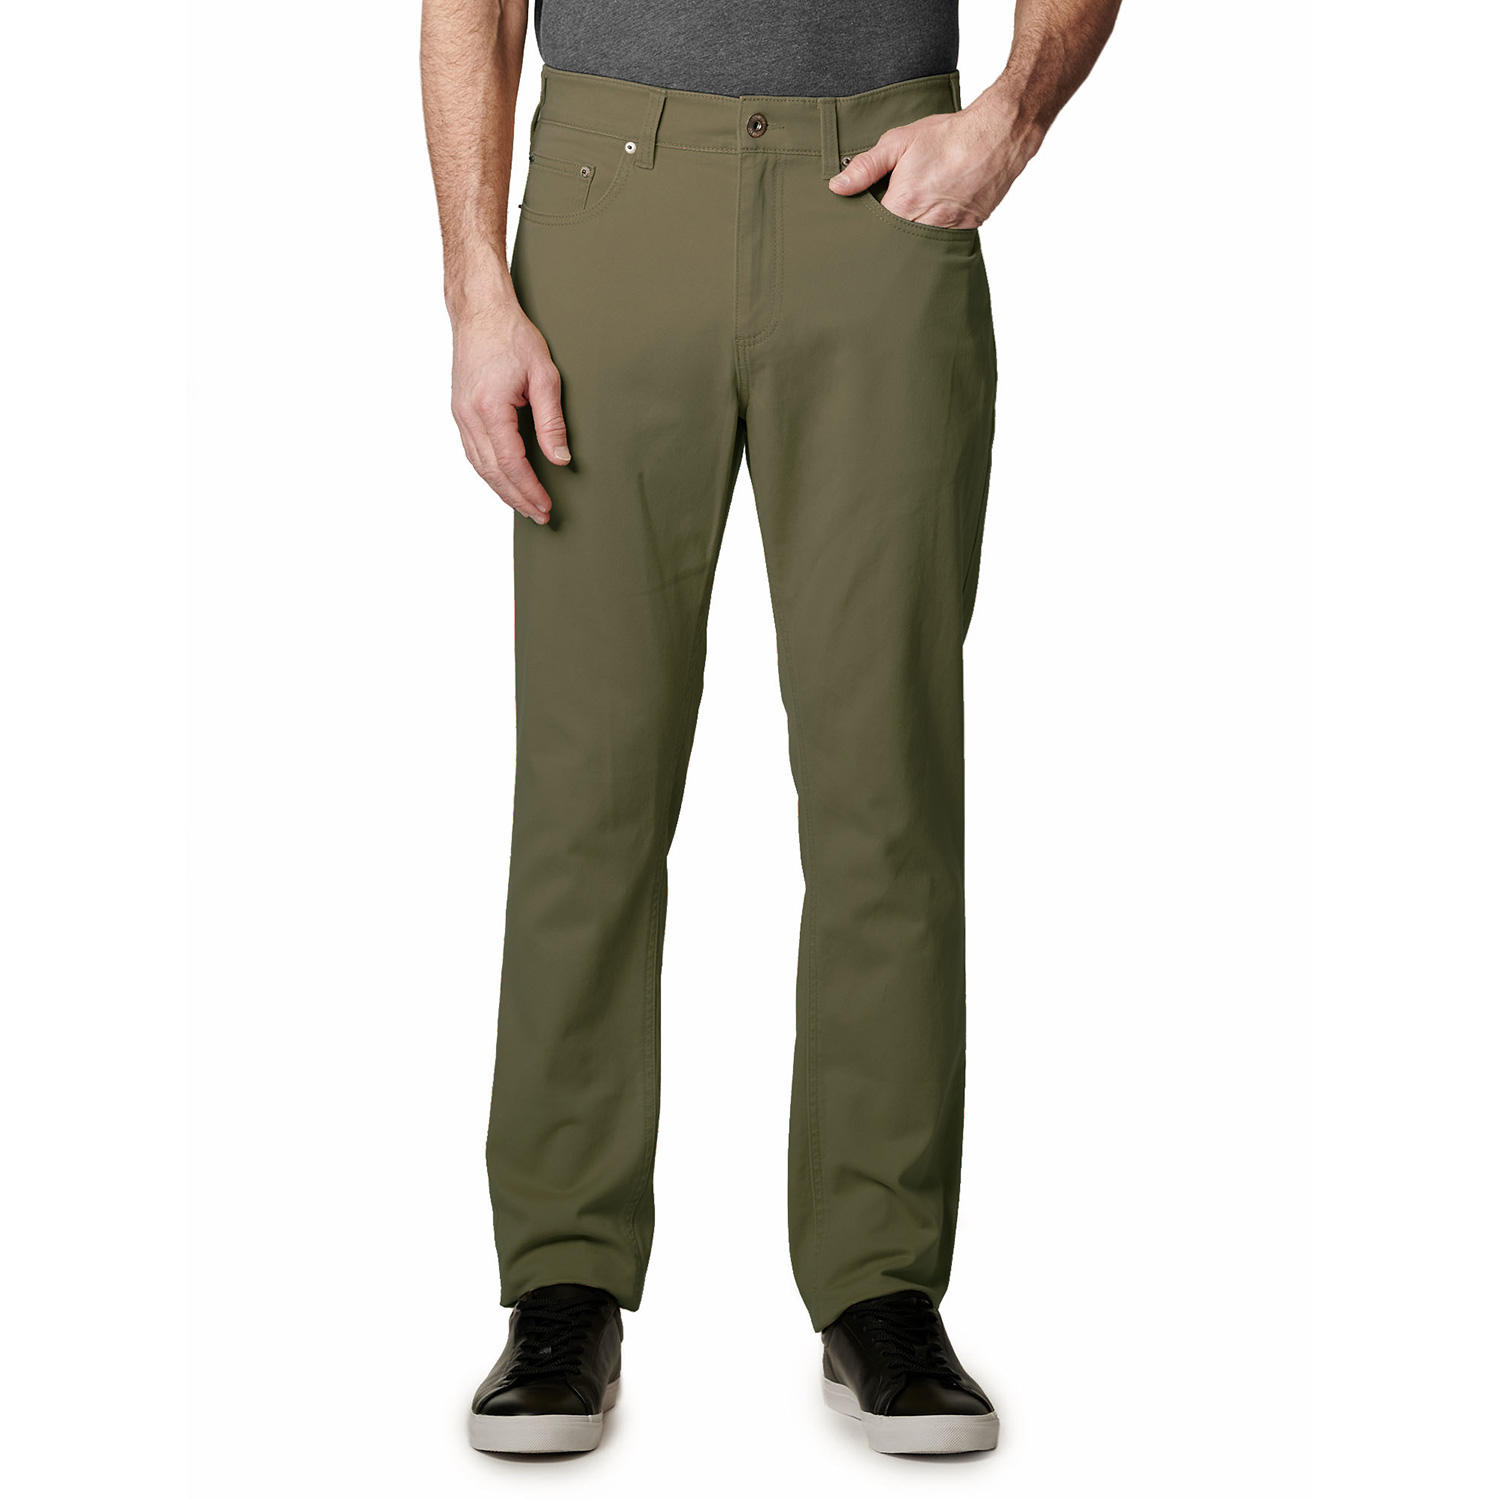 IRON Clothing PATRIOT Comfort Flex Waistband 5 Pocket Stretch Twill Pant - Turtle Green 38x34